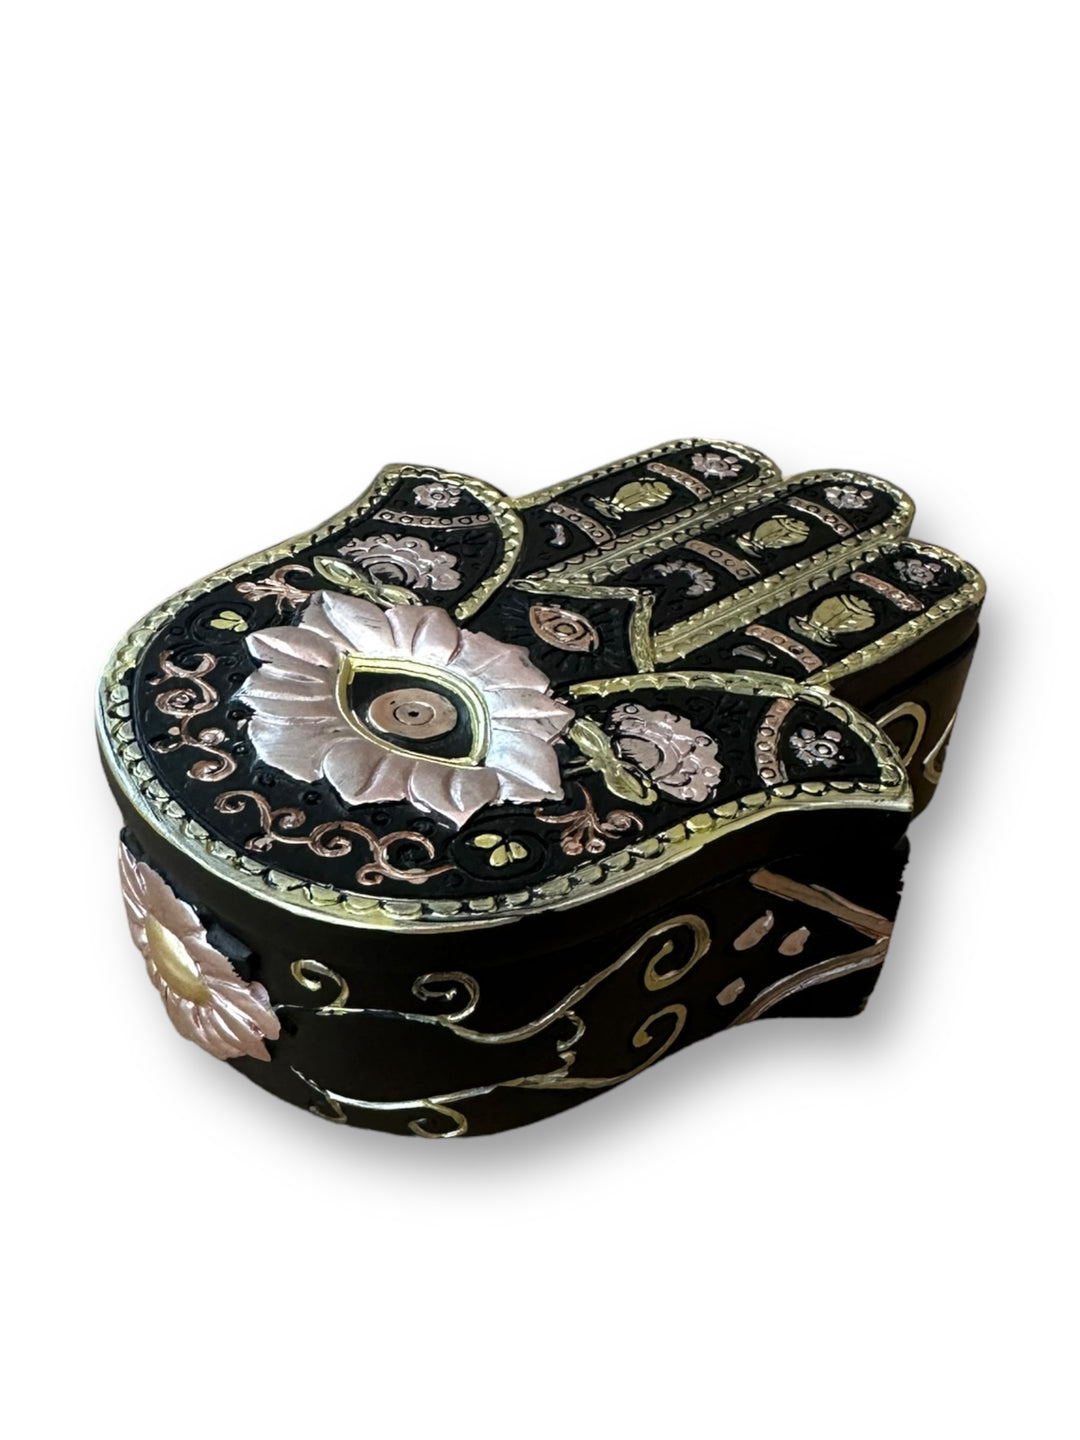 Hamsa Wooden Jewelry box